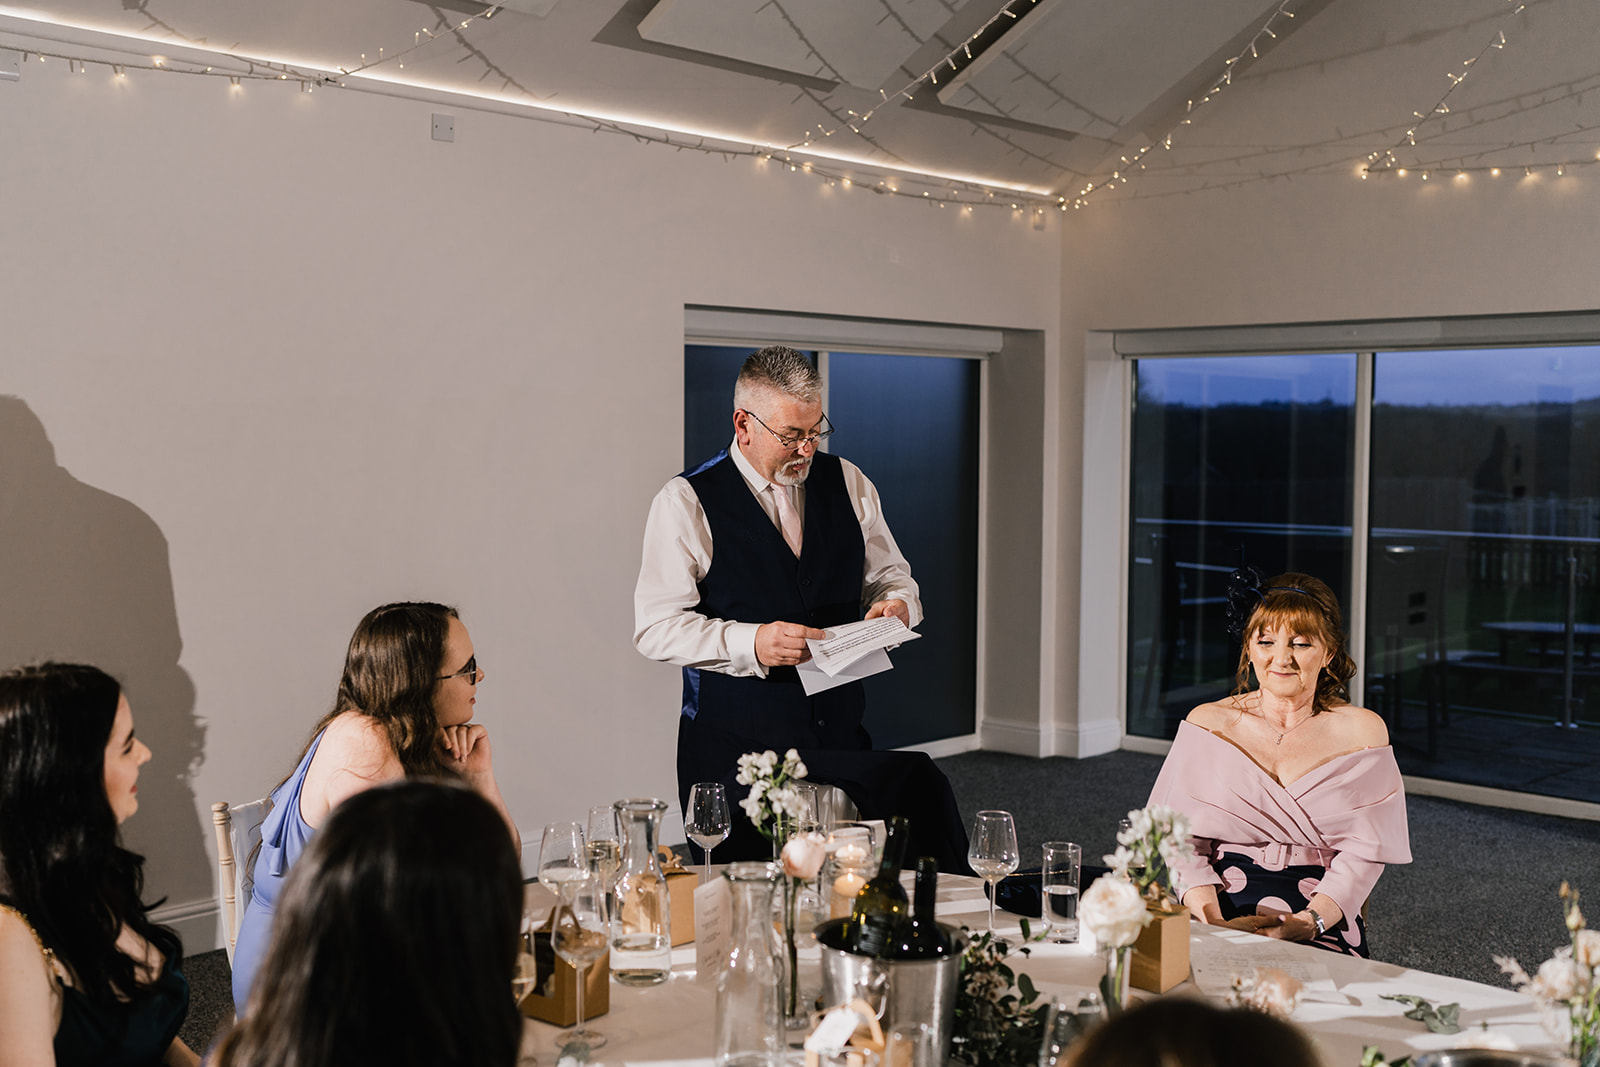 Wedding Reception at Llanerch Vineyard